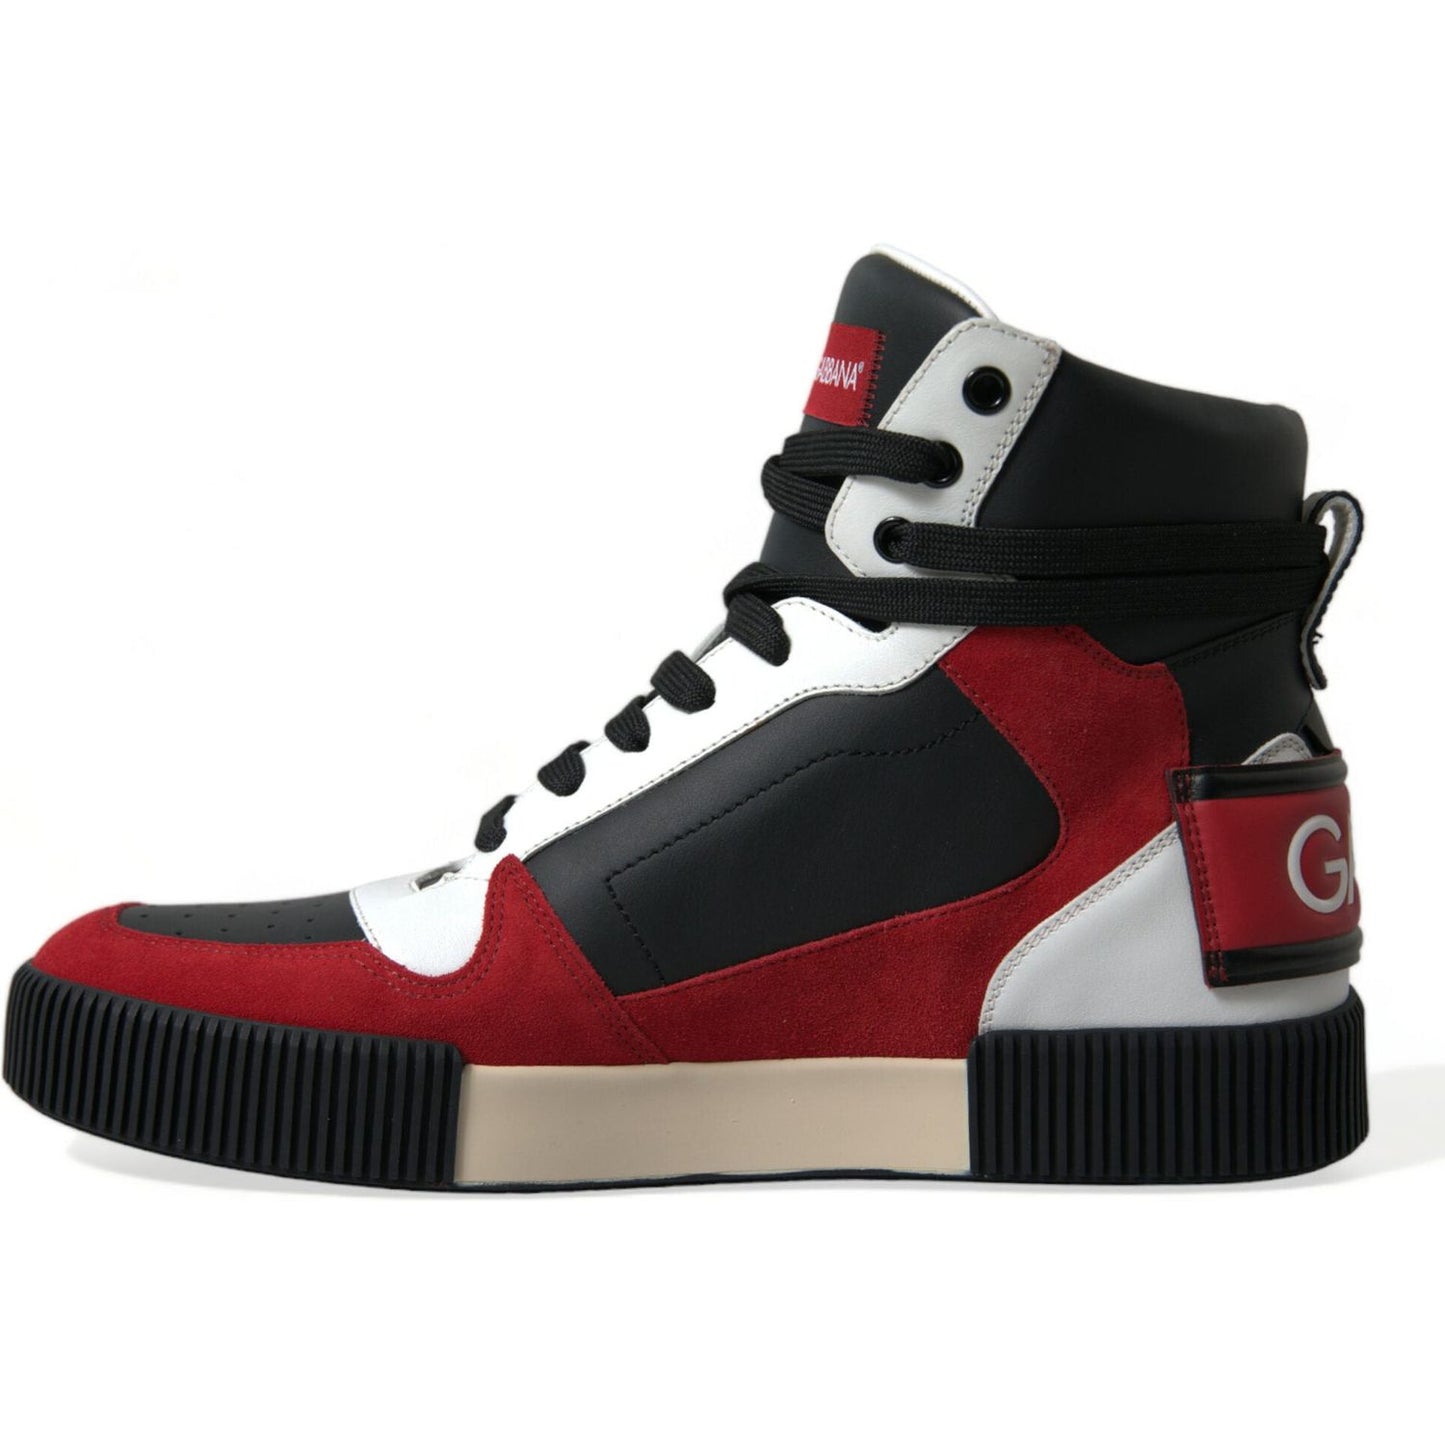 Dolce & Gabbana Debonair Calfskin High-Top Sneakers black-red-leather-high-top-miami-sneakers-shoes